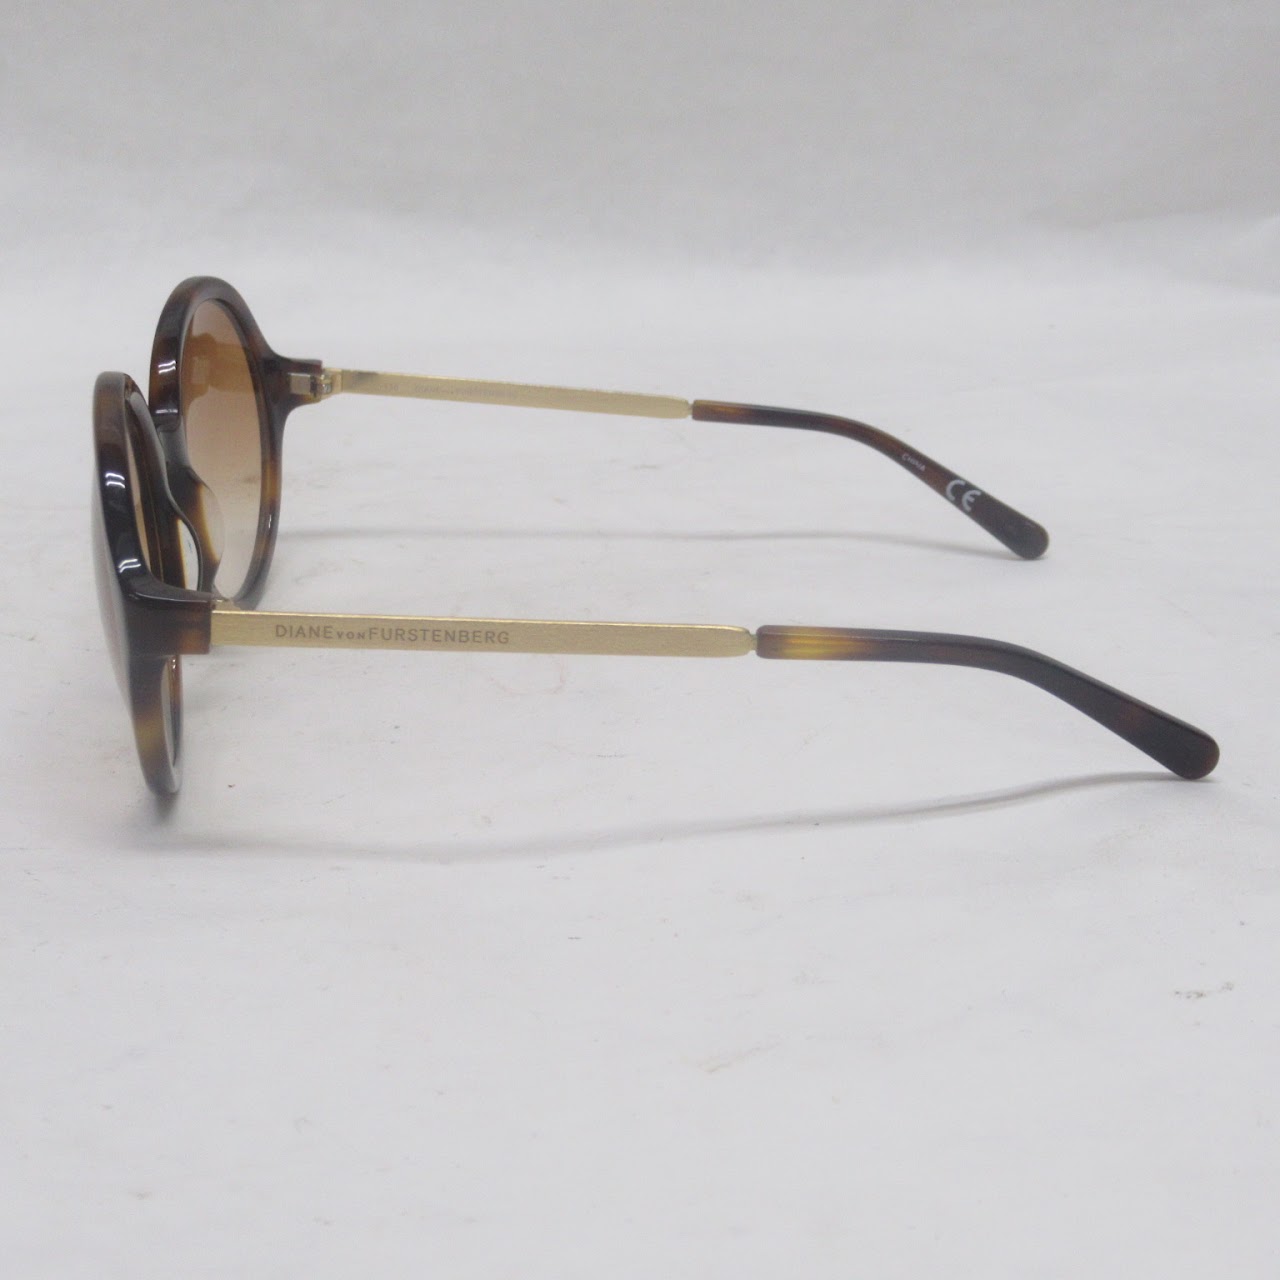 Diane von Furstenberg Sonata Sunglasses